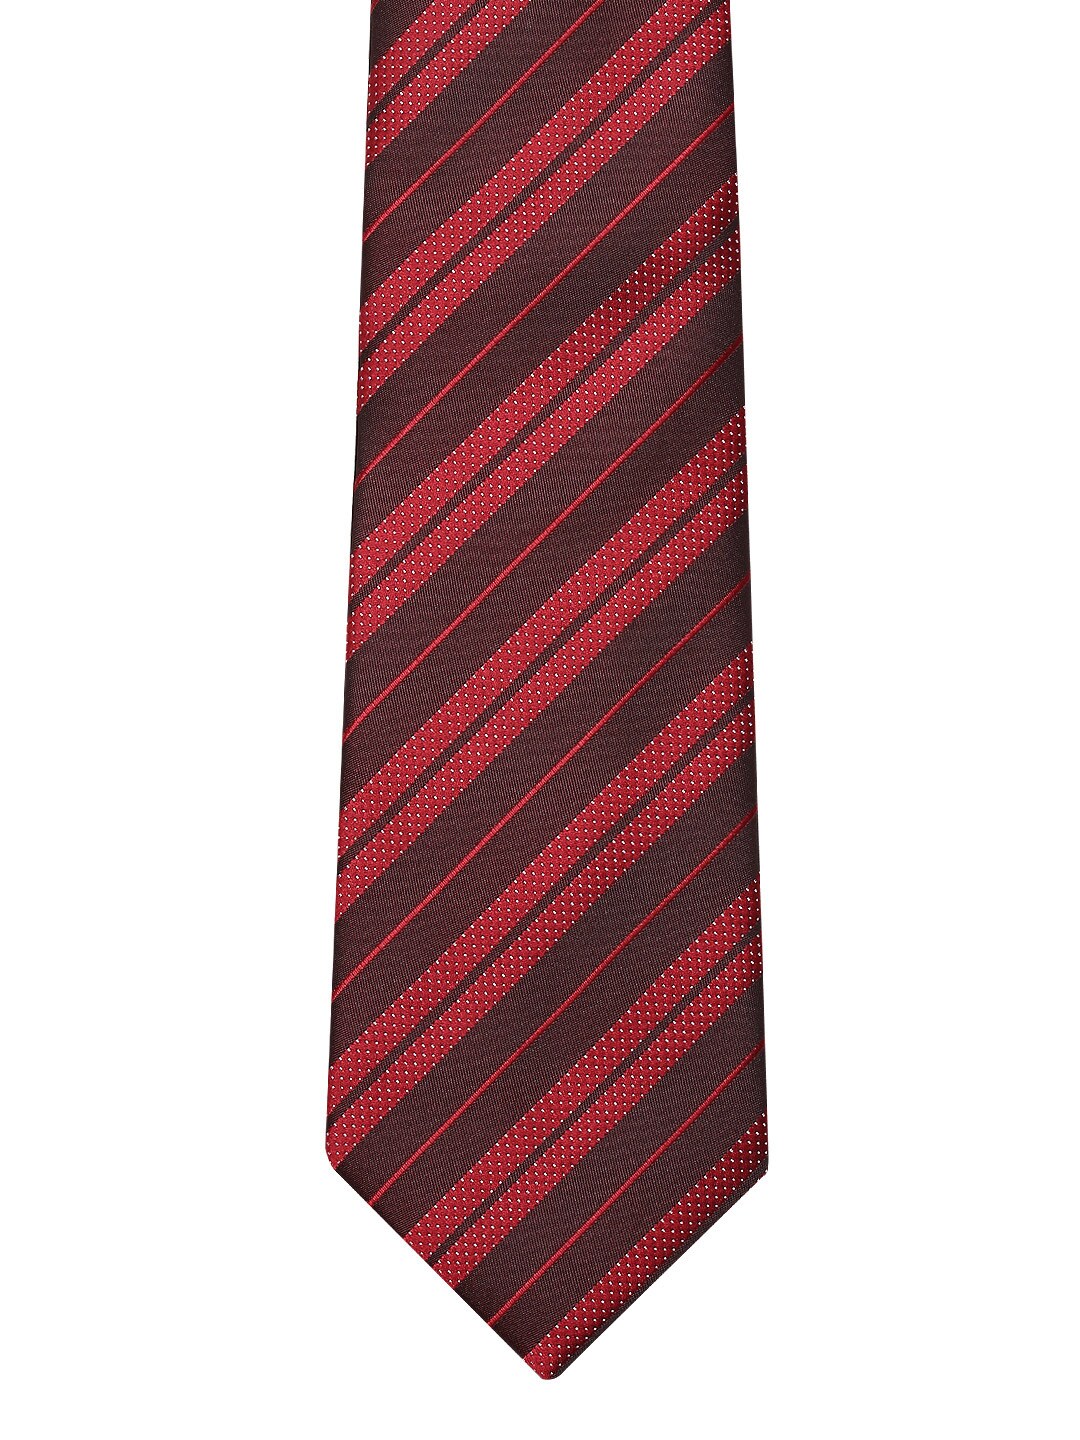 Park Avenue Men Red & Brown Striped Tie